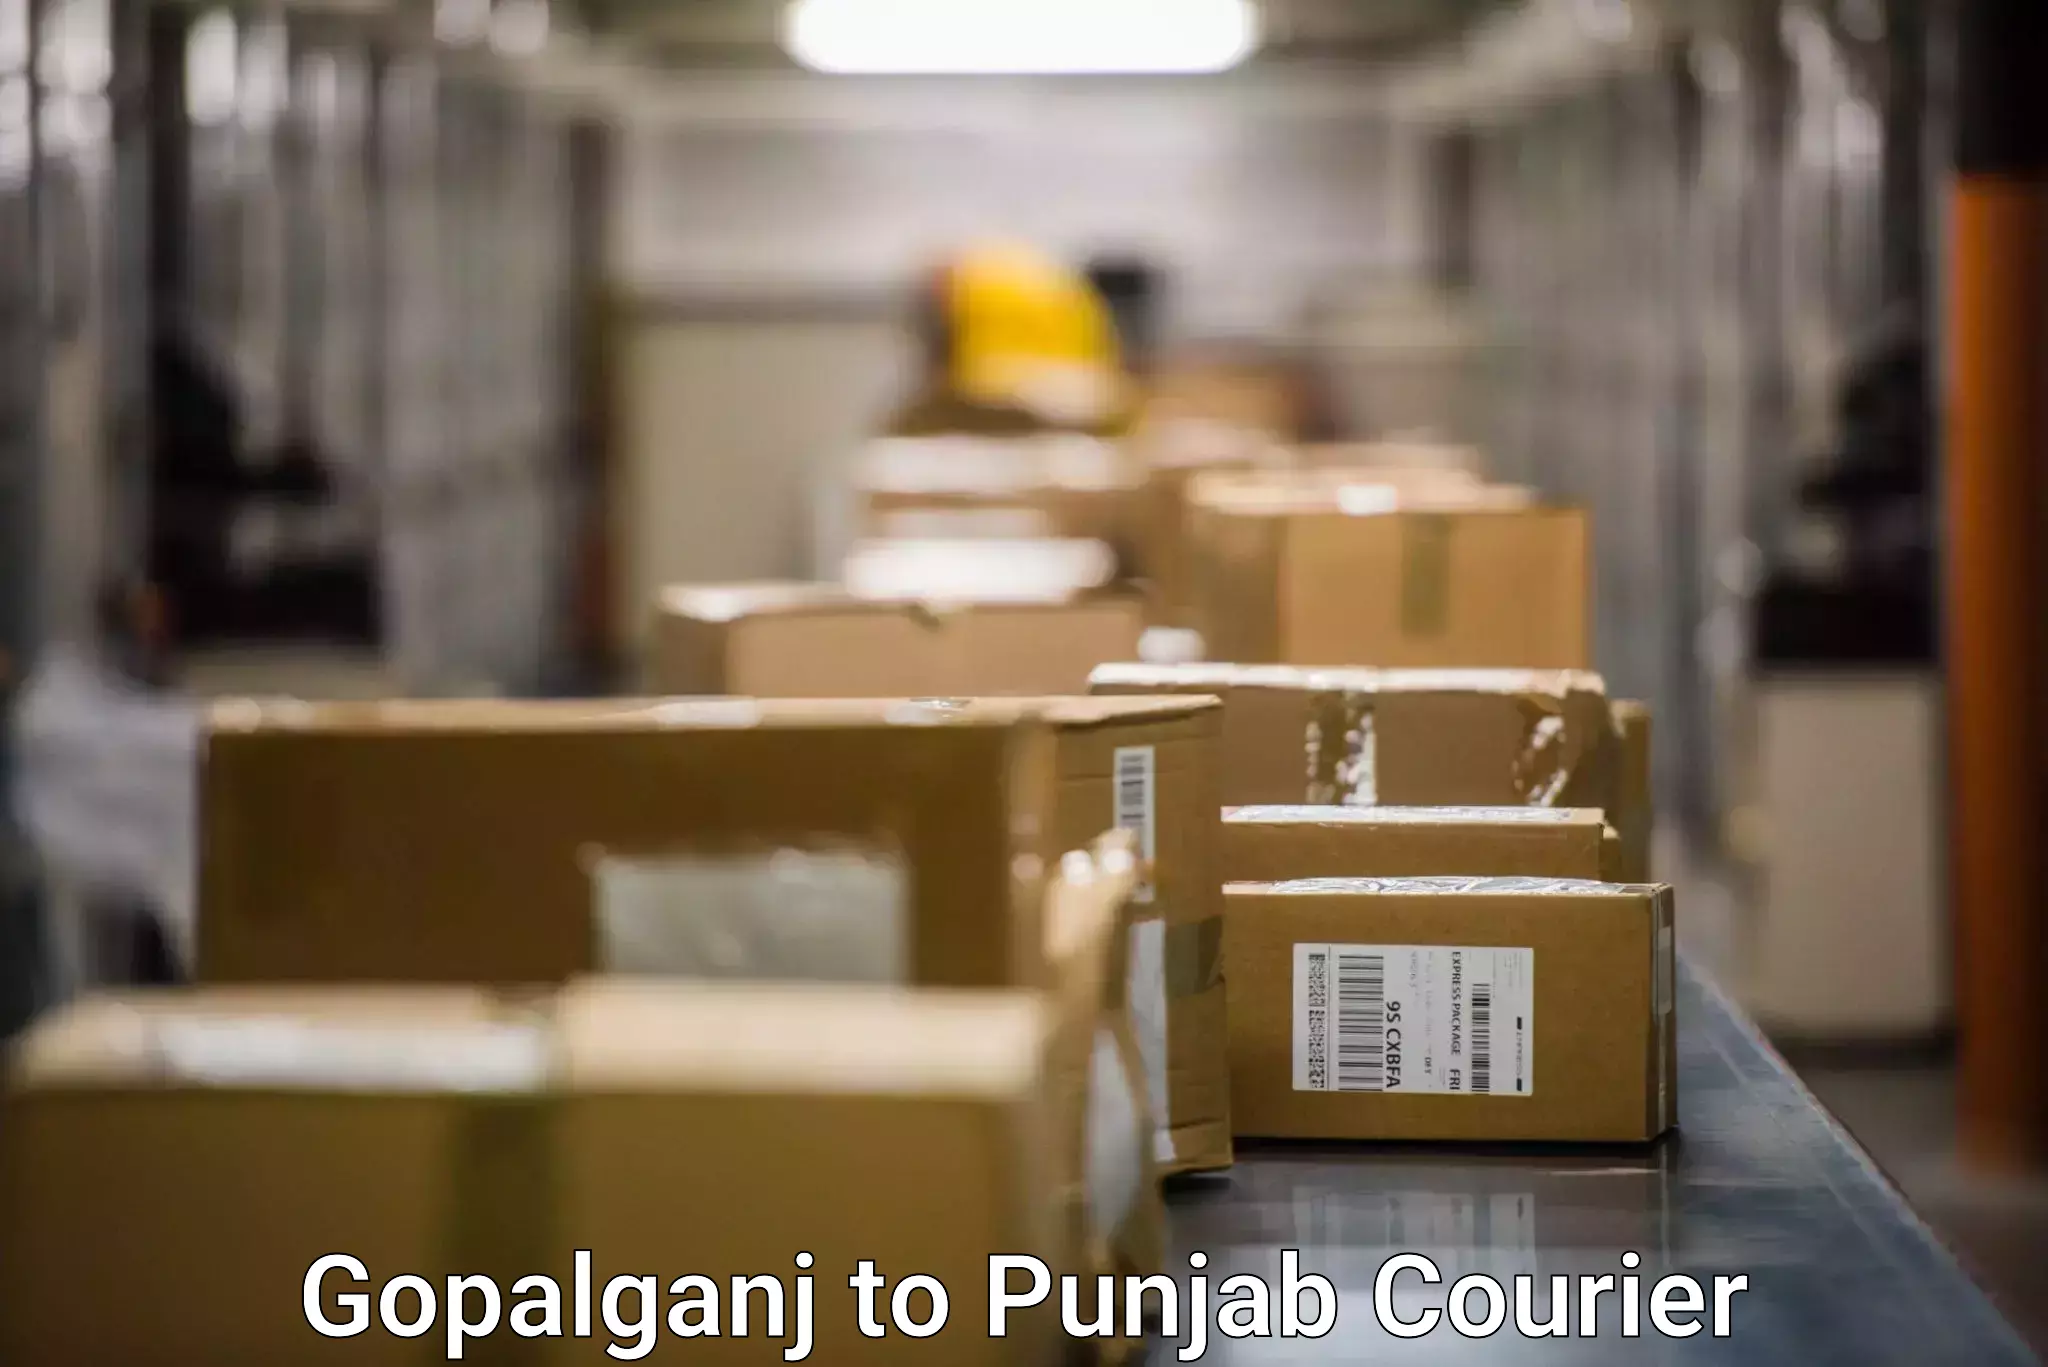 Fast delivery service Gopalganj to Amritsar